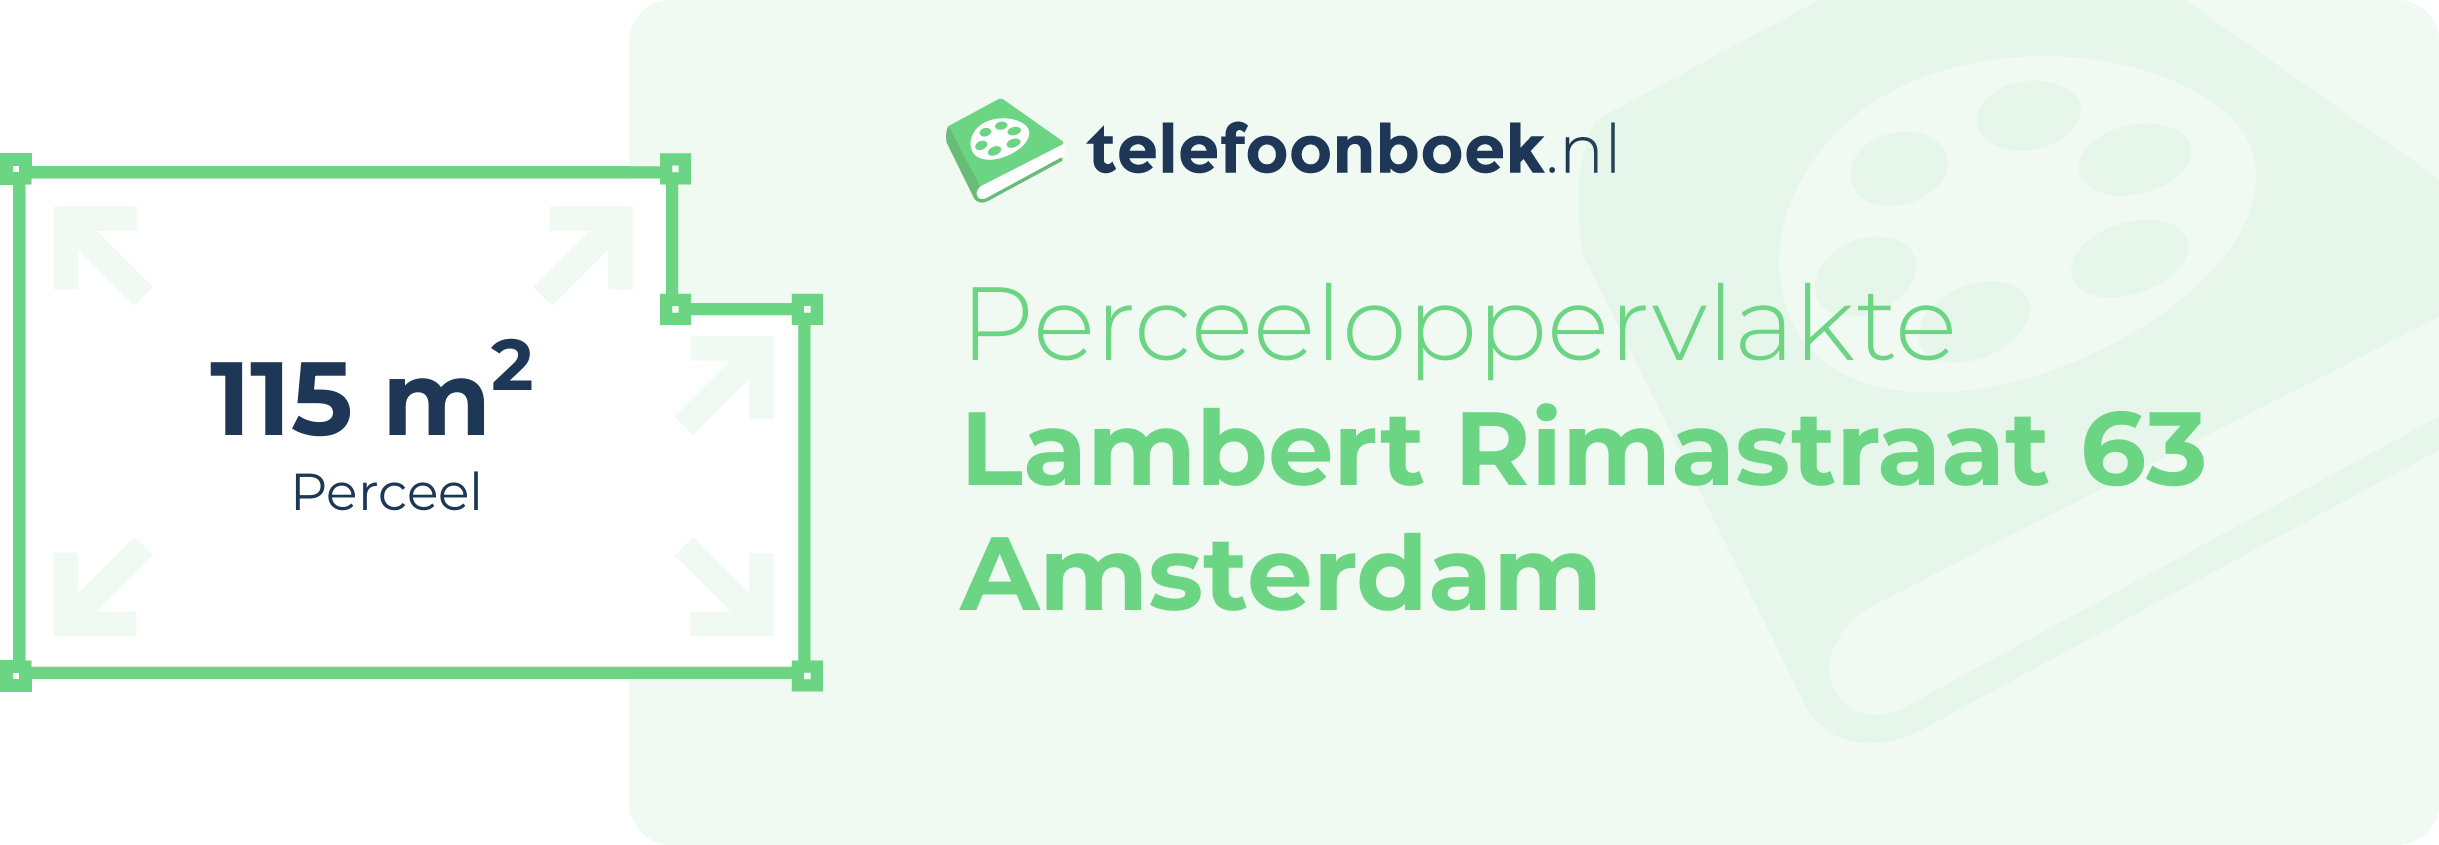 Perceeloppervlakte Lambert Rimastraat 63 Amsterdam